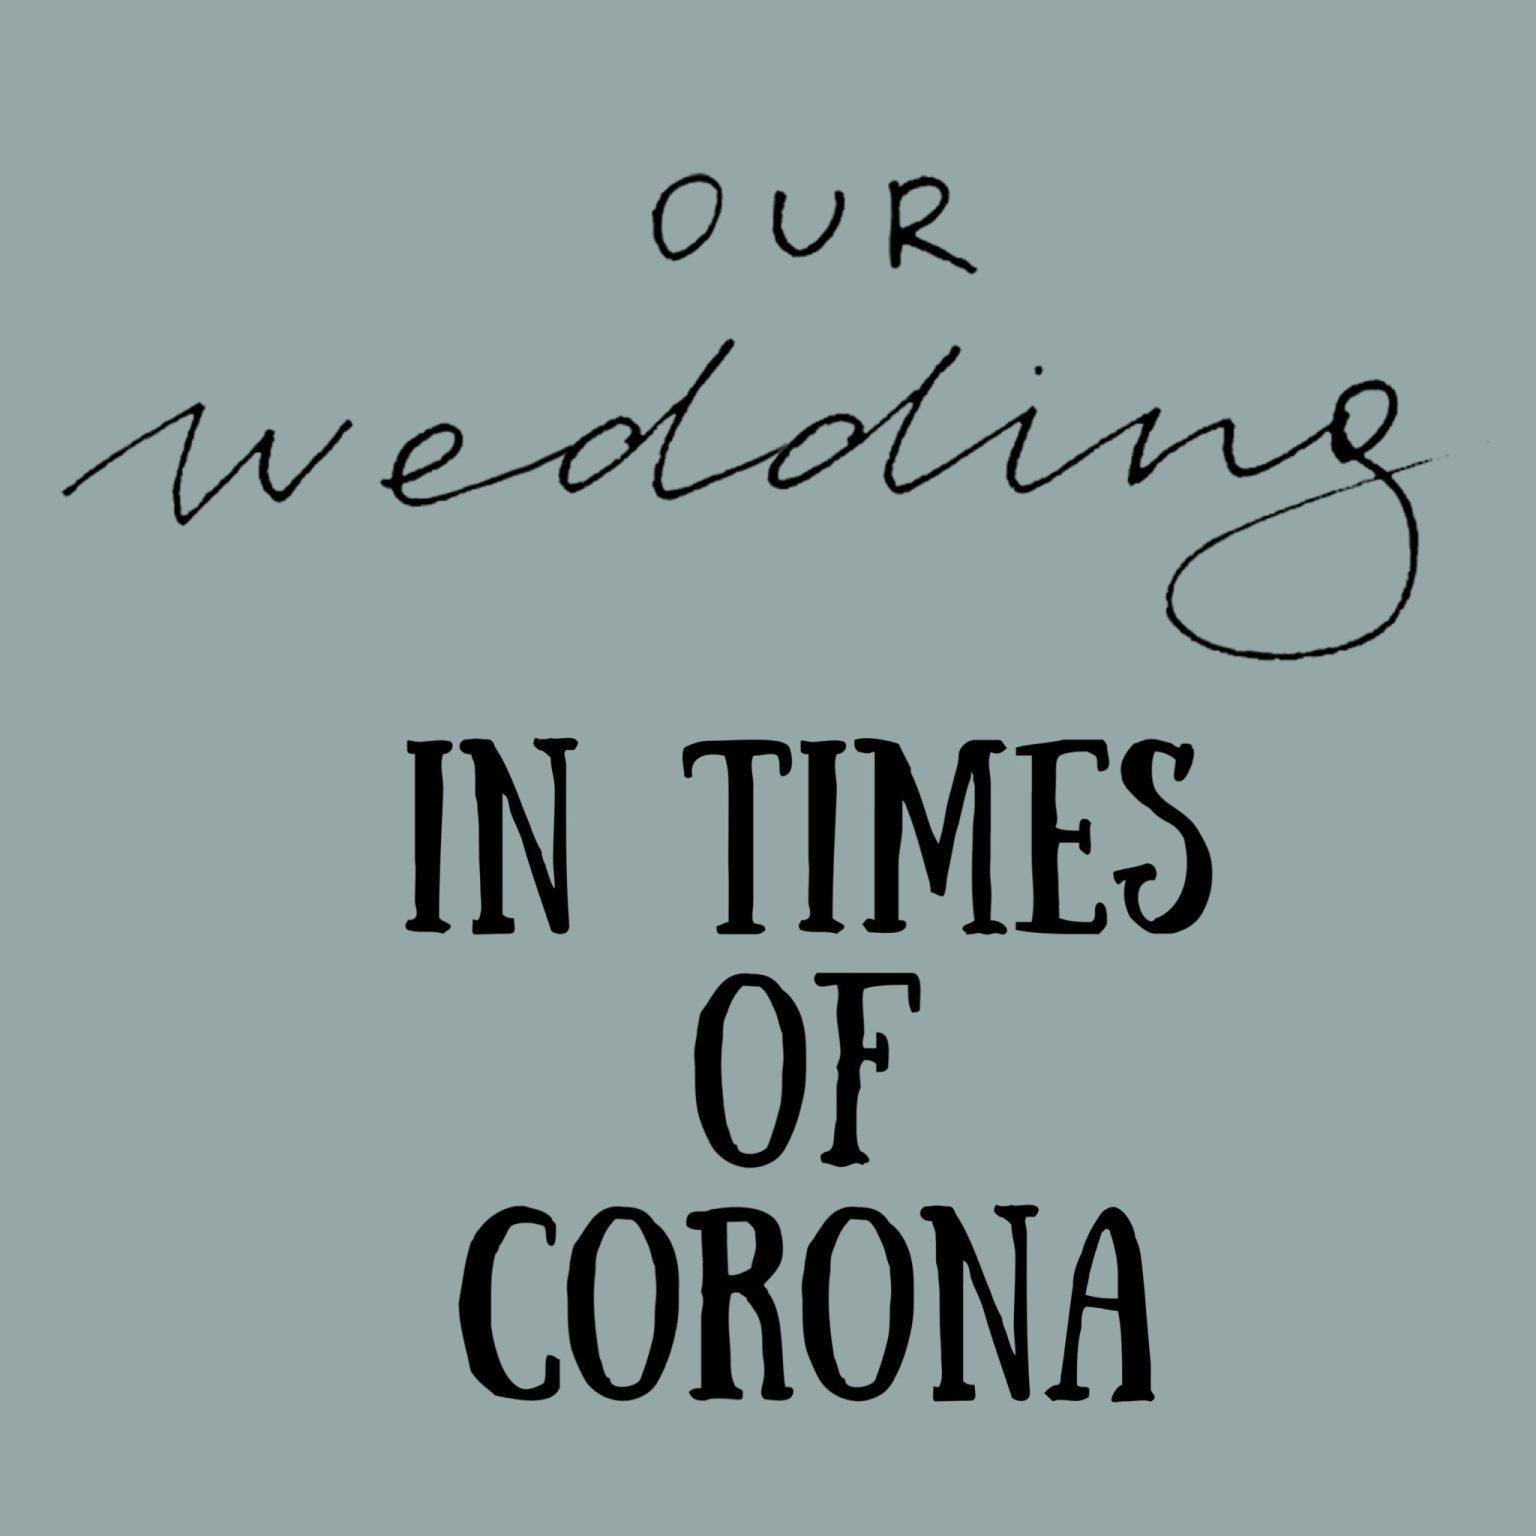 Hochzeit verschieben wegen Corona?